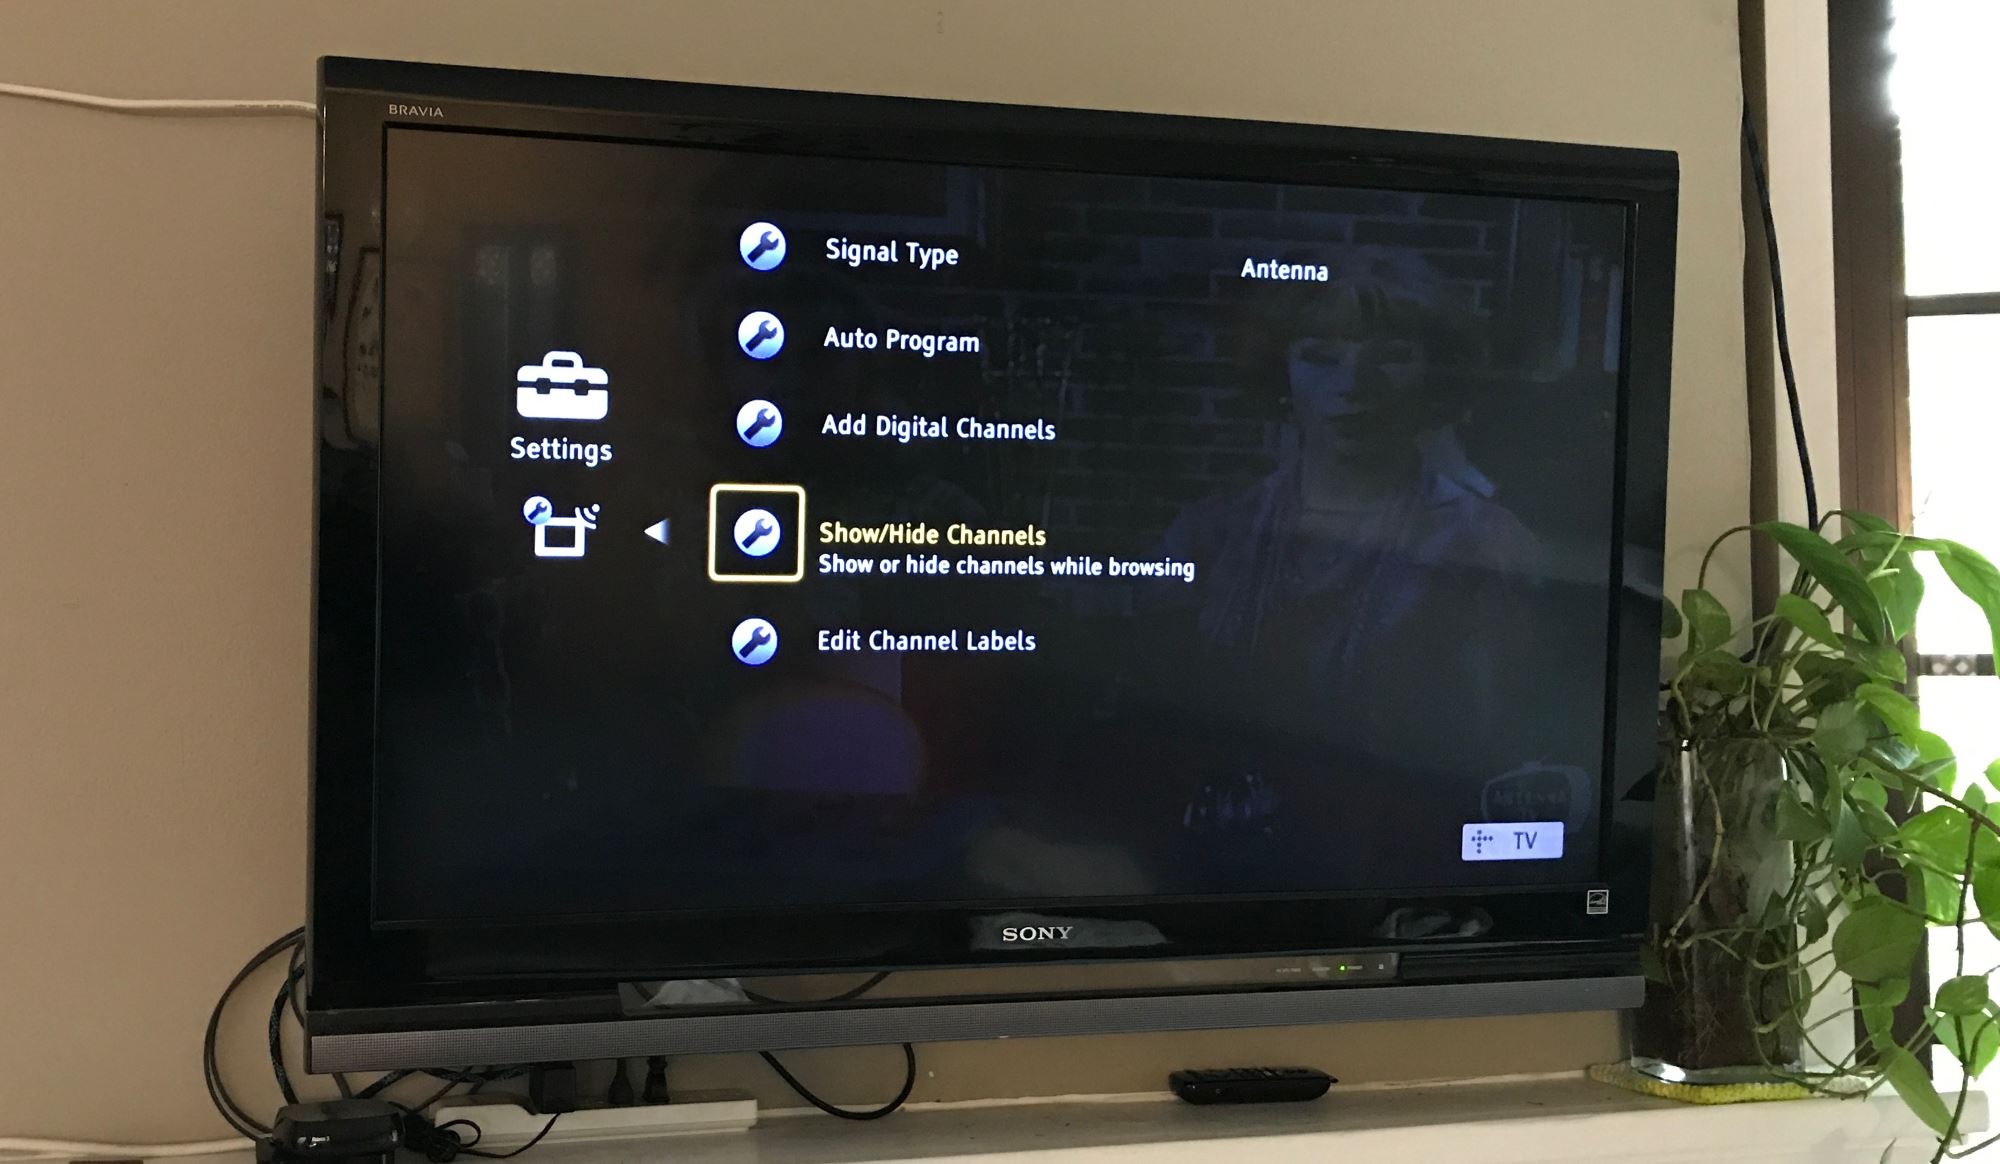 Settings menu on Sony Bravia TV